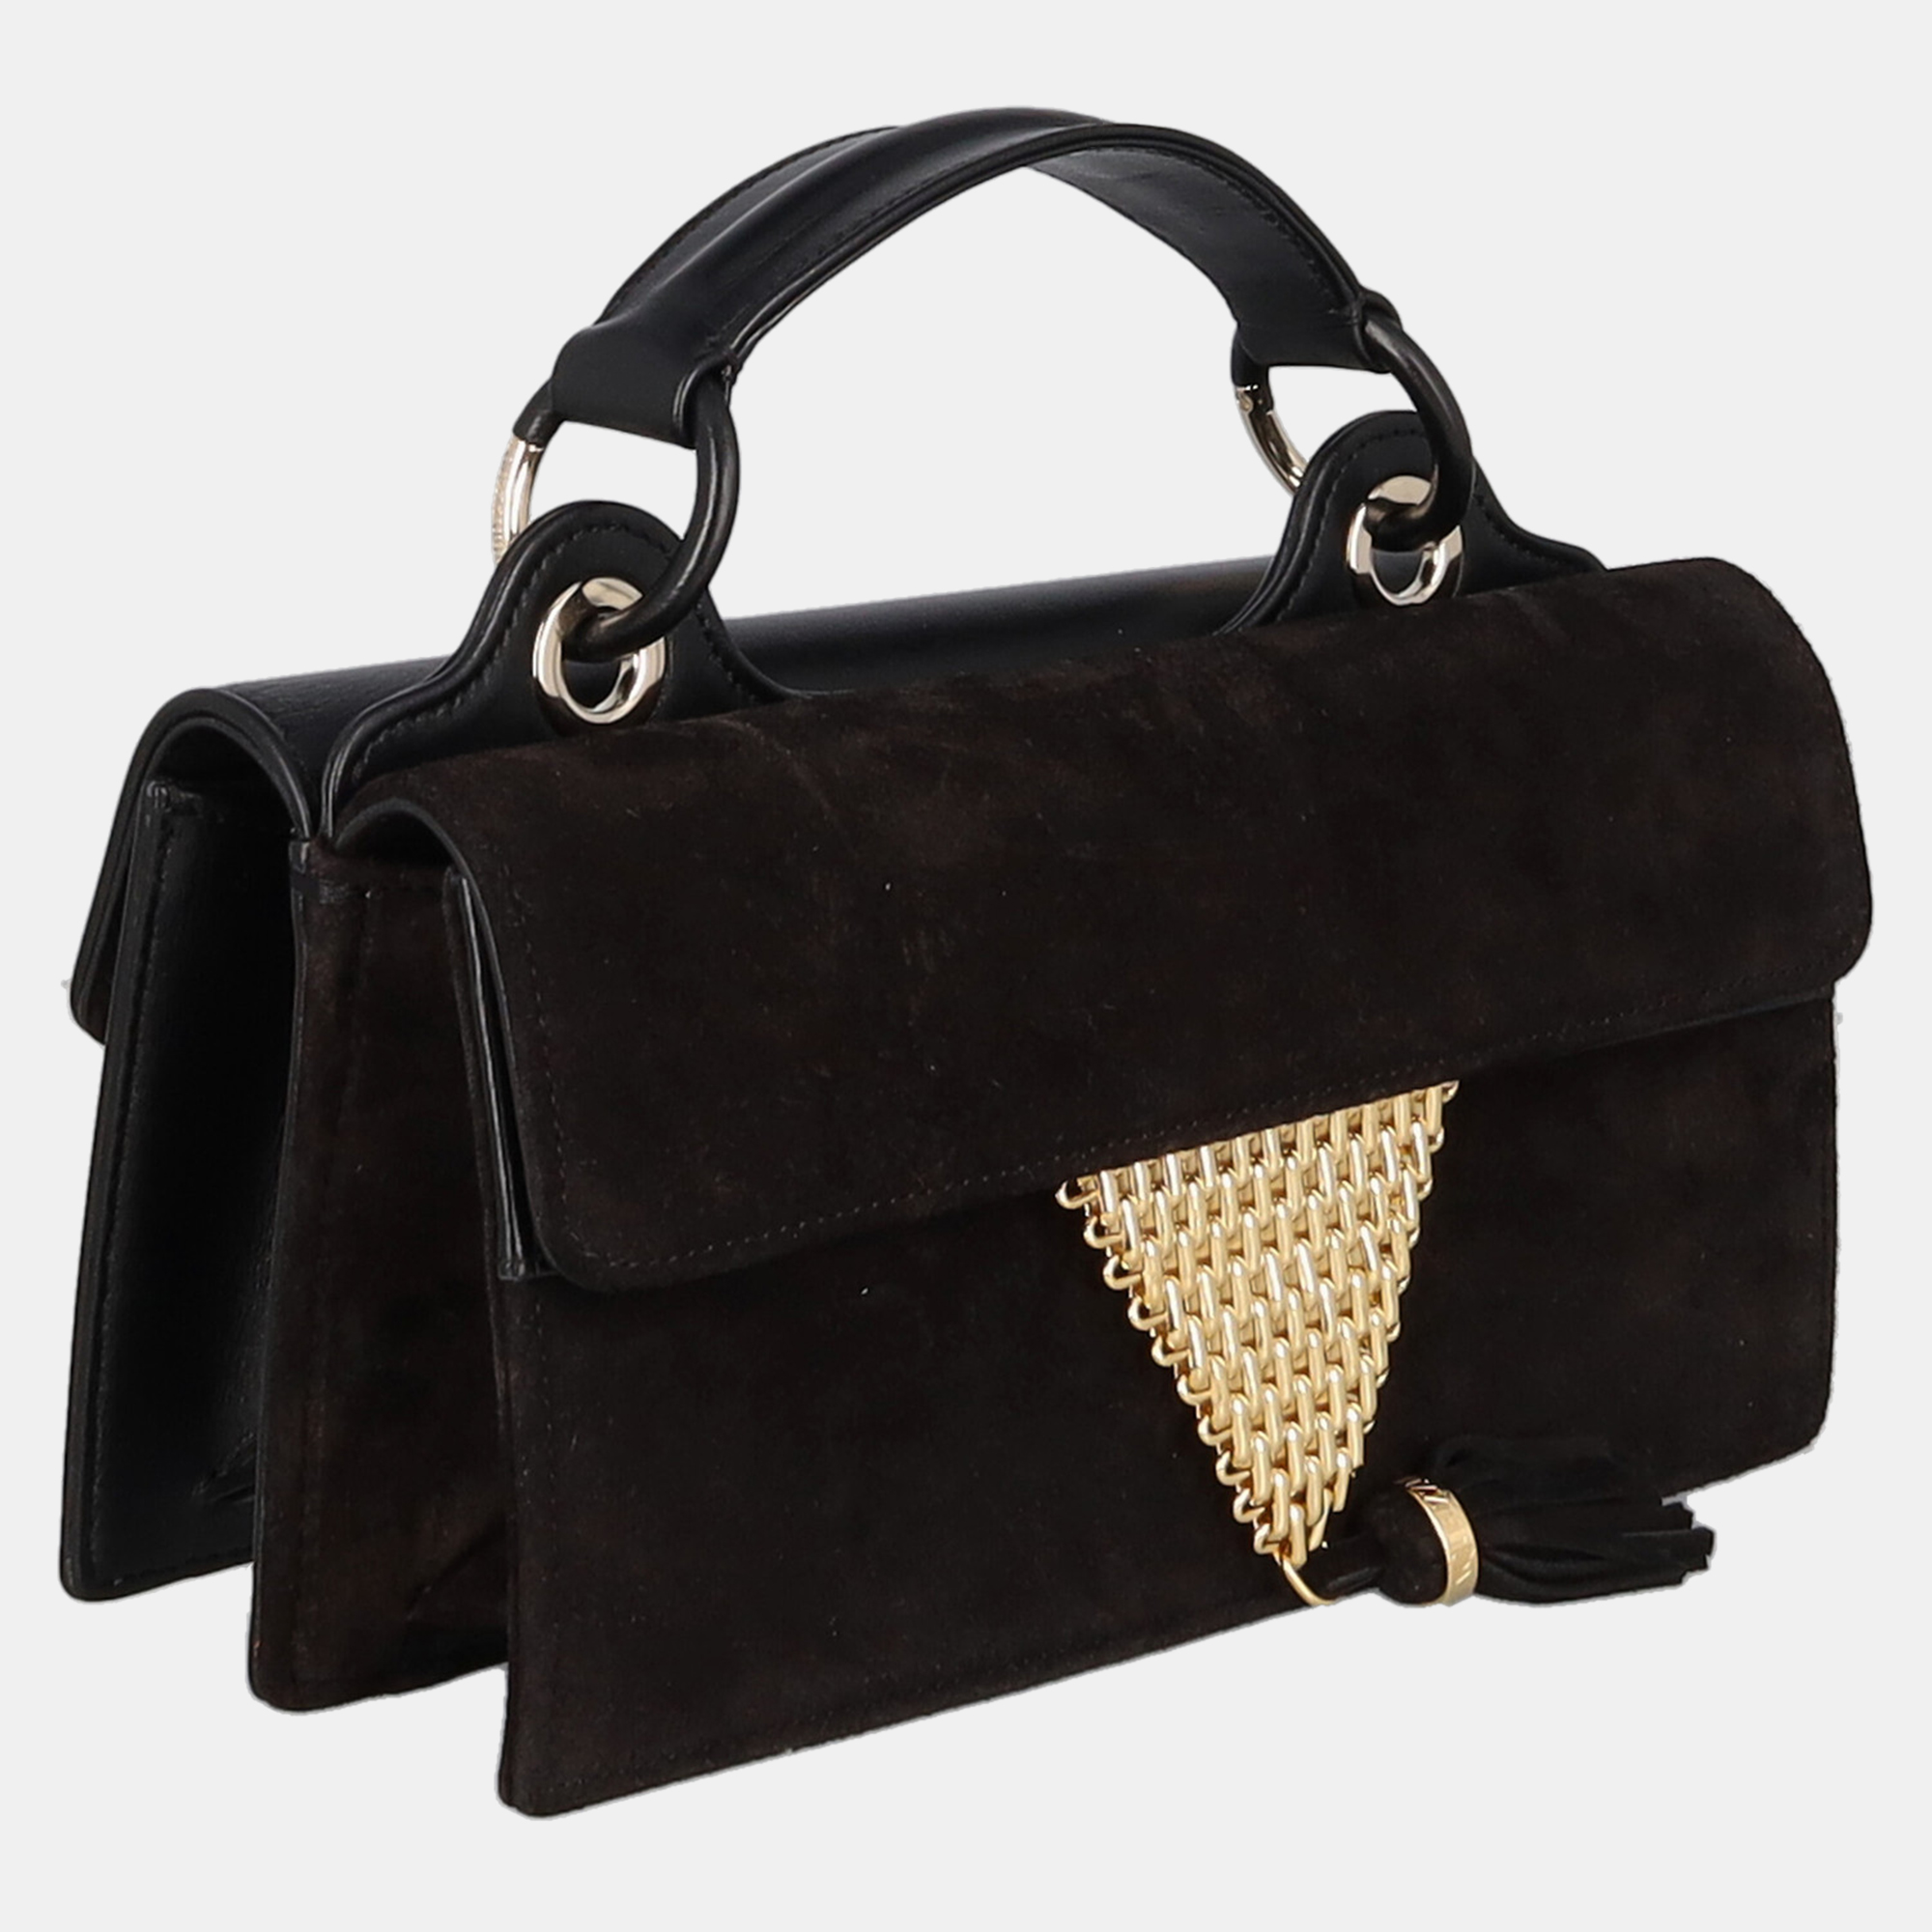 Aquazzura  Women's Leather Handbag - Black - One Size